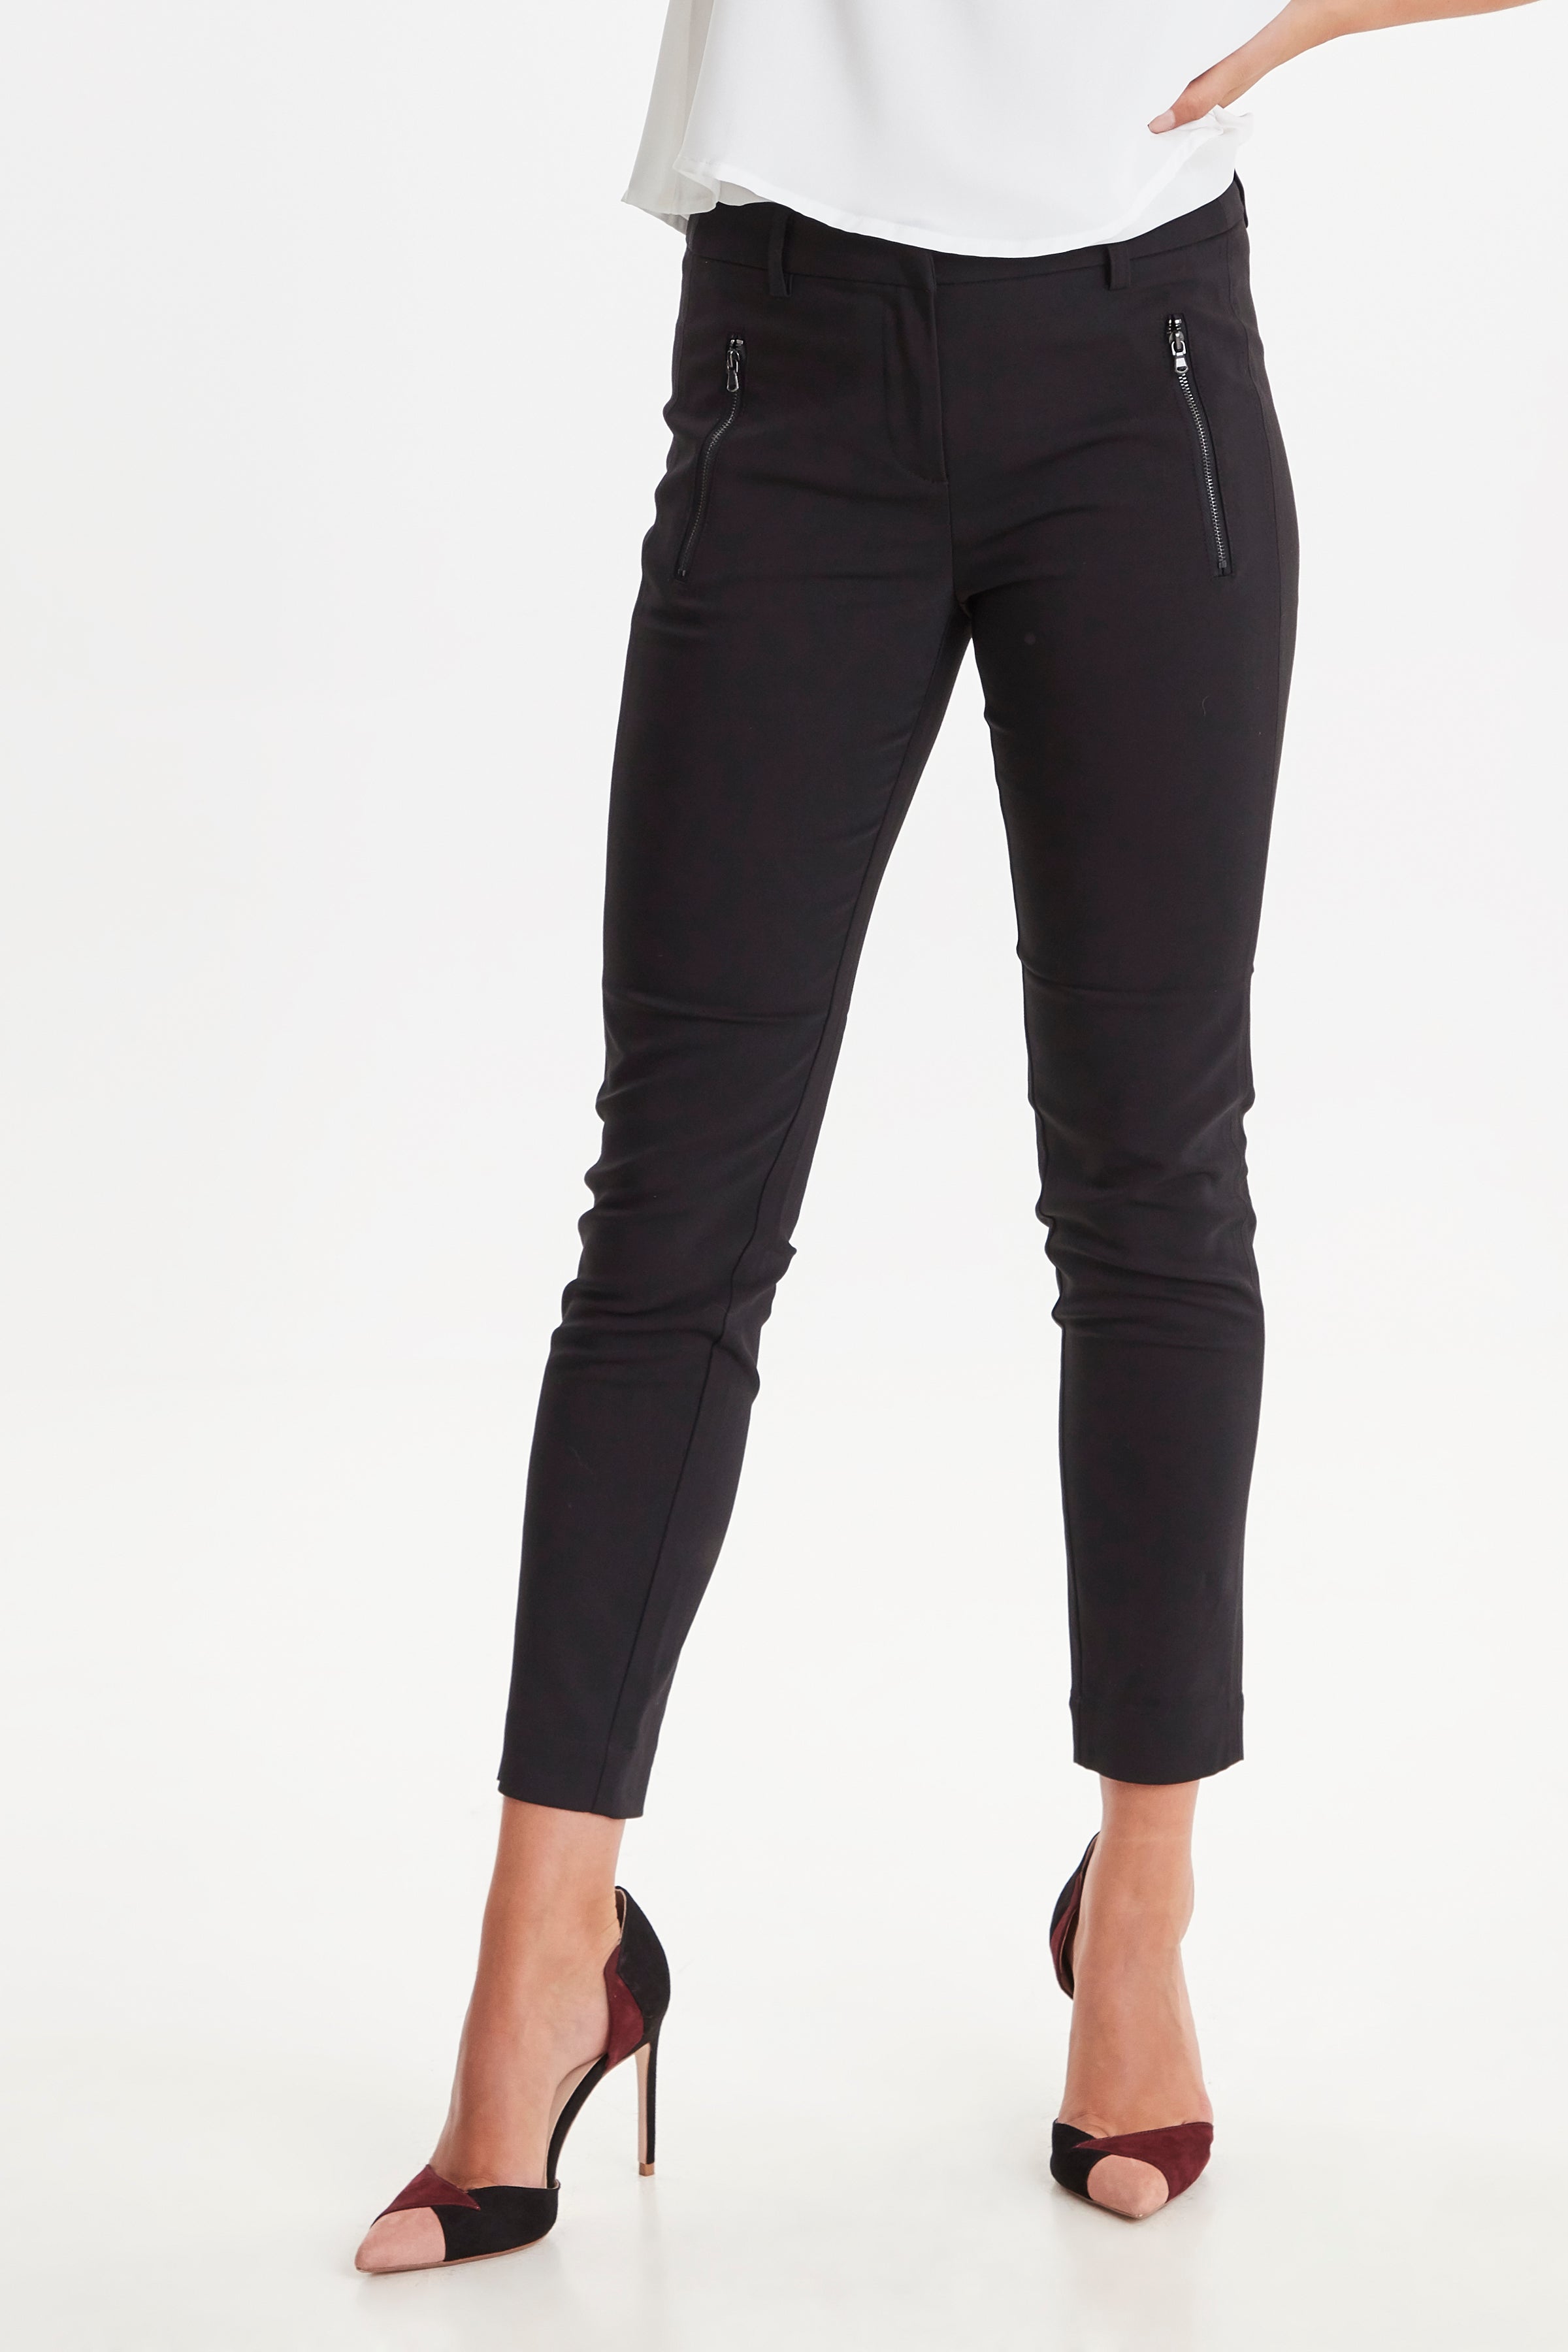 Fransa Zapant Black Cigarette Style Trousers, Boutique Ruby 20603400 67 –